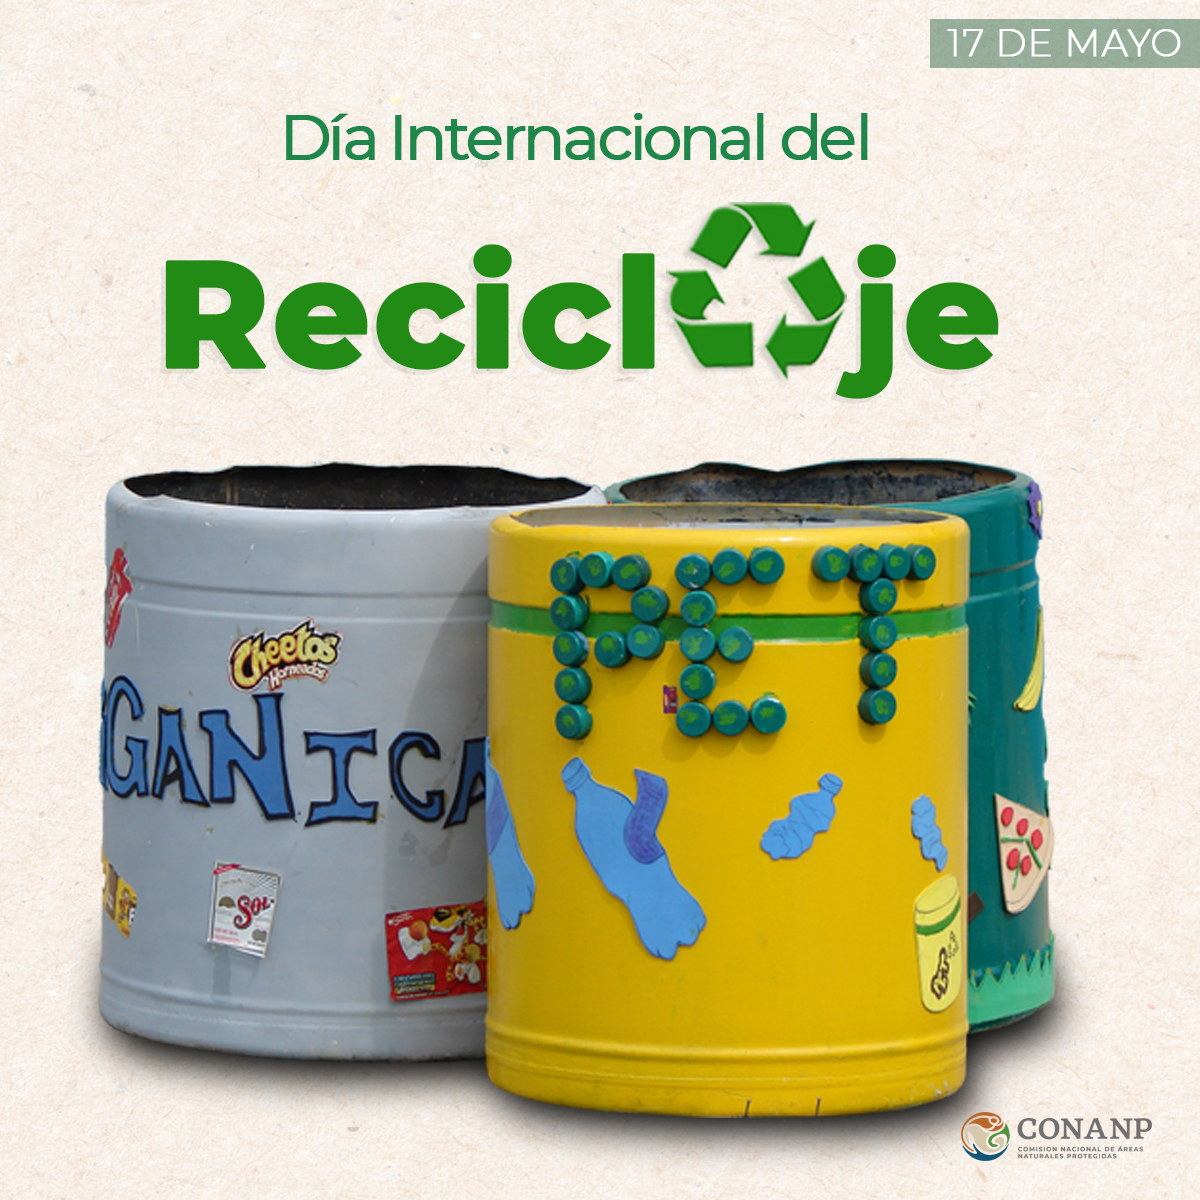 /cms/uploads/image/file/497848/D_a_Internacional_del_Reciclaje_2019.jpg